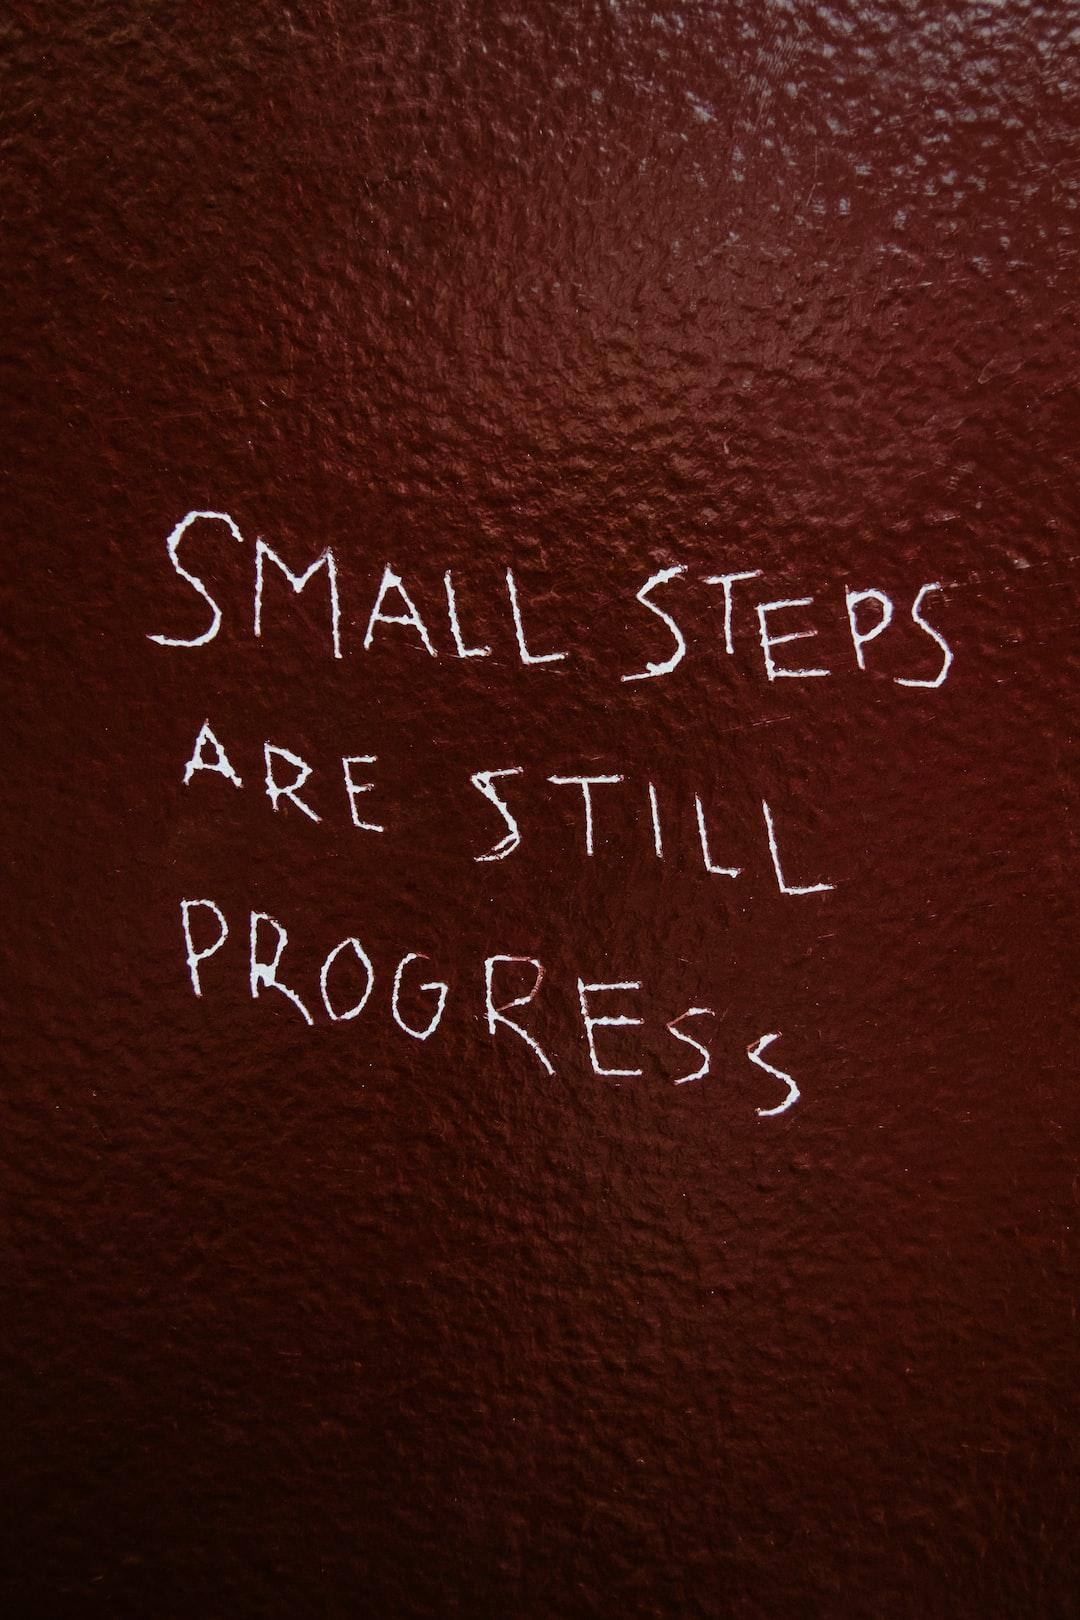 Keep Track of Progress